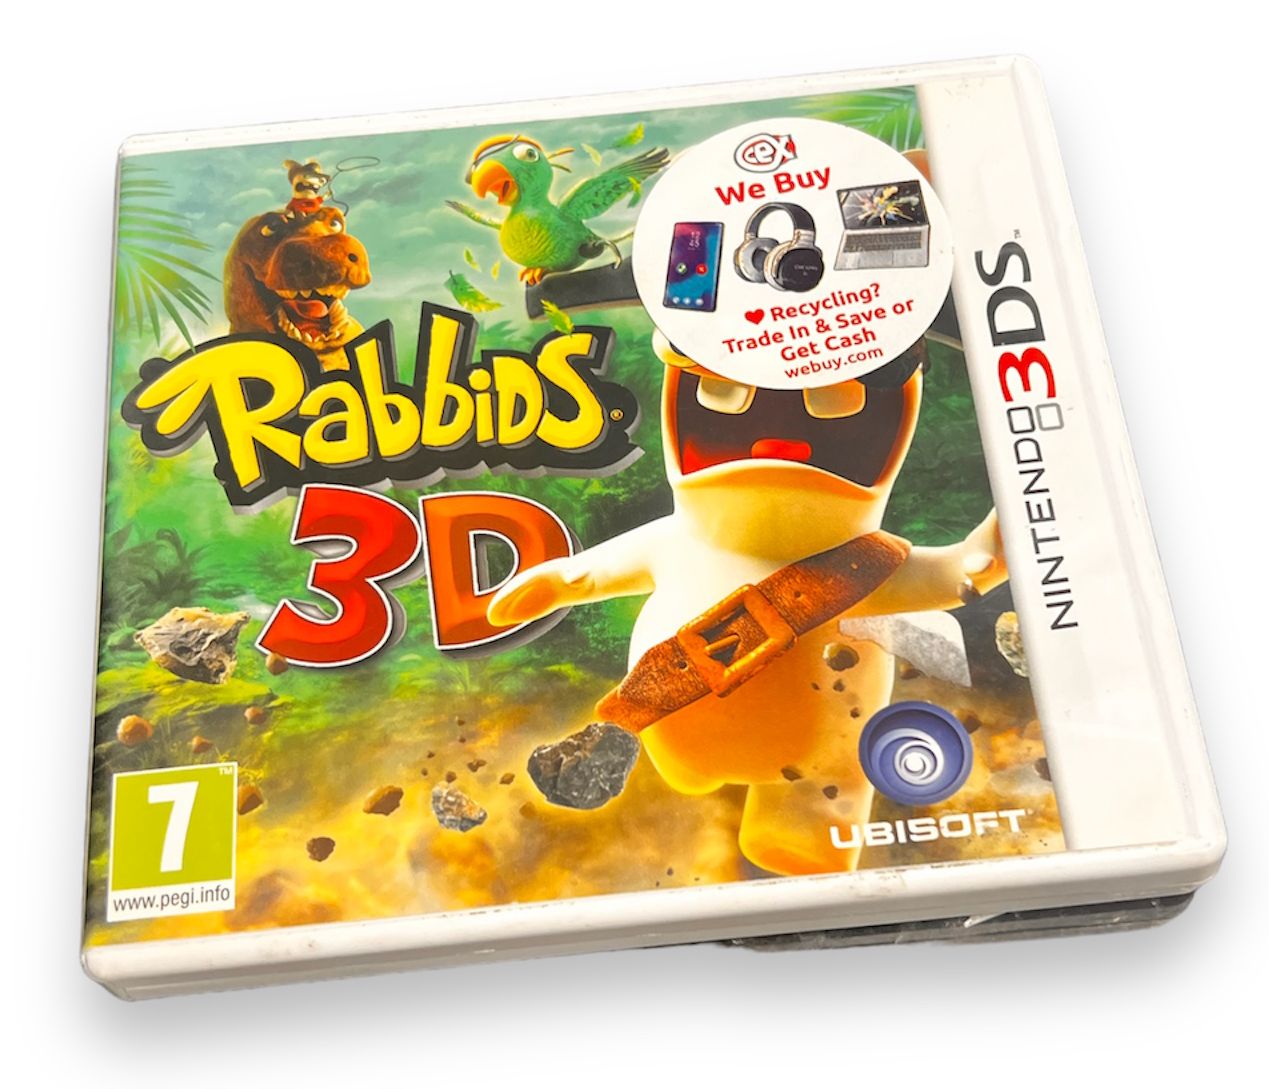 LEGO RABBIDS 3D Nintendo 3DS game